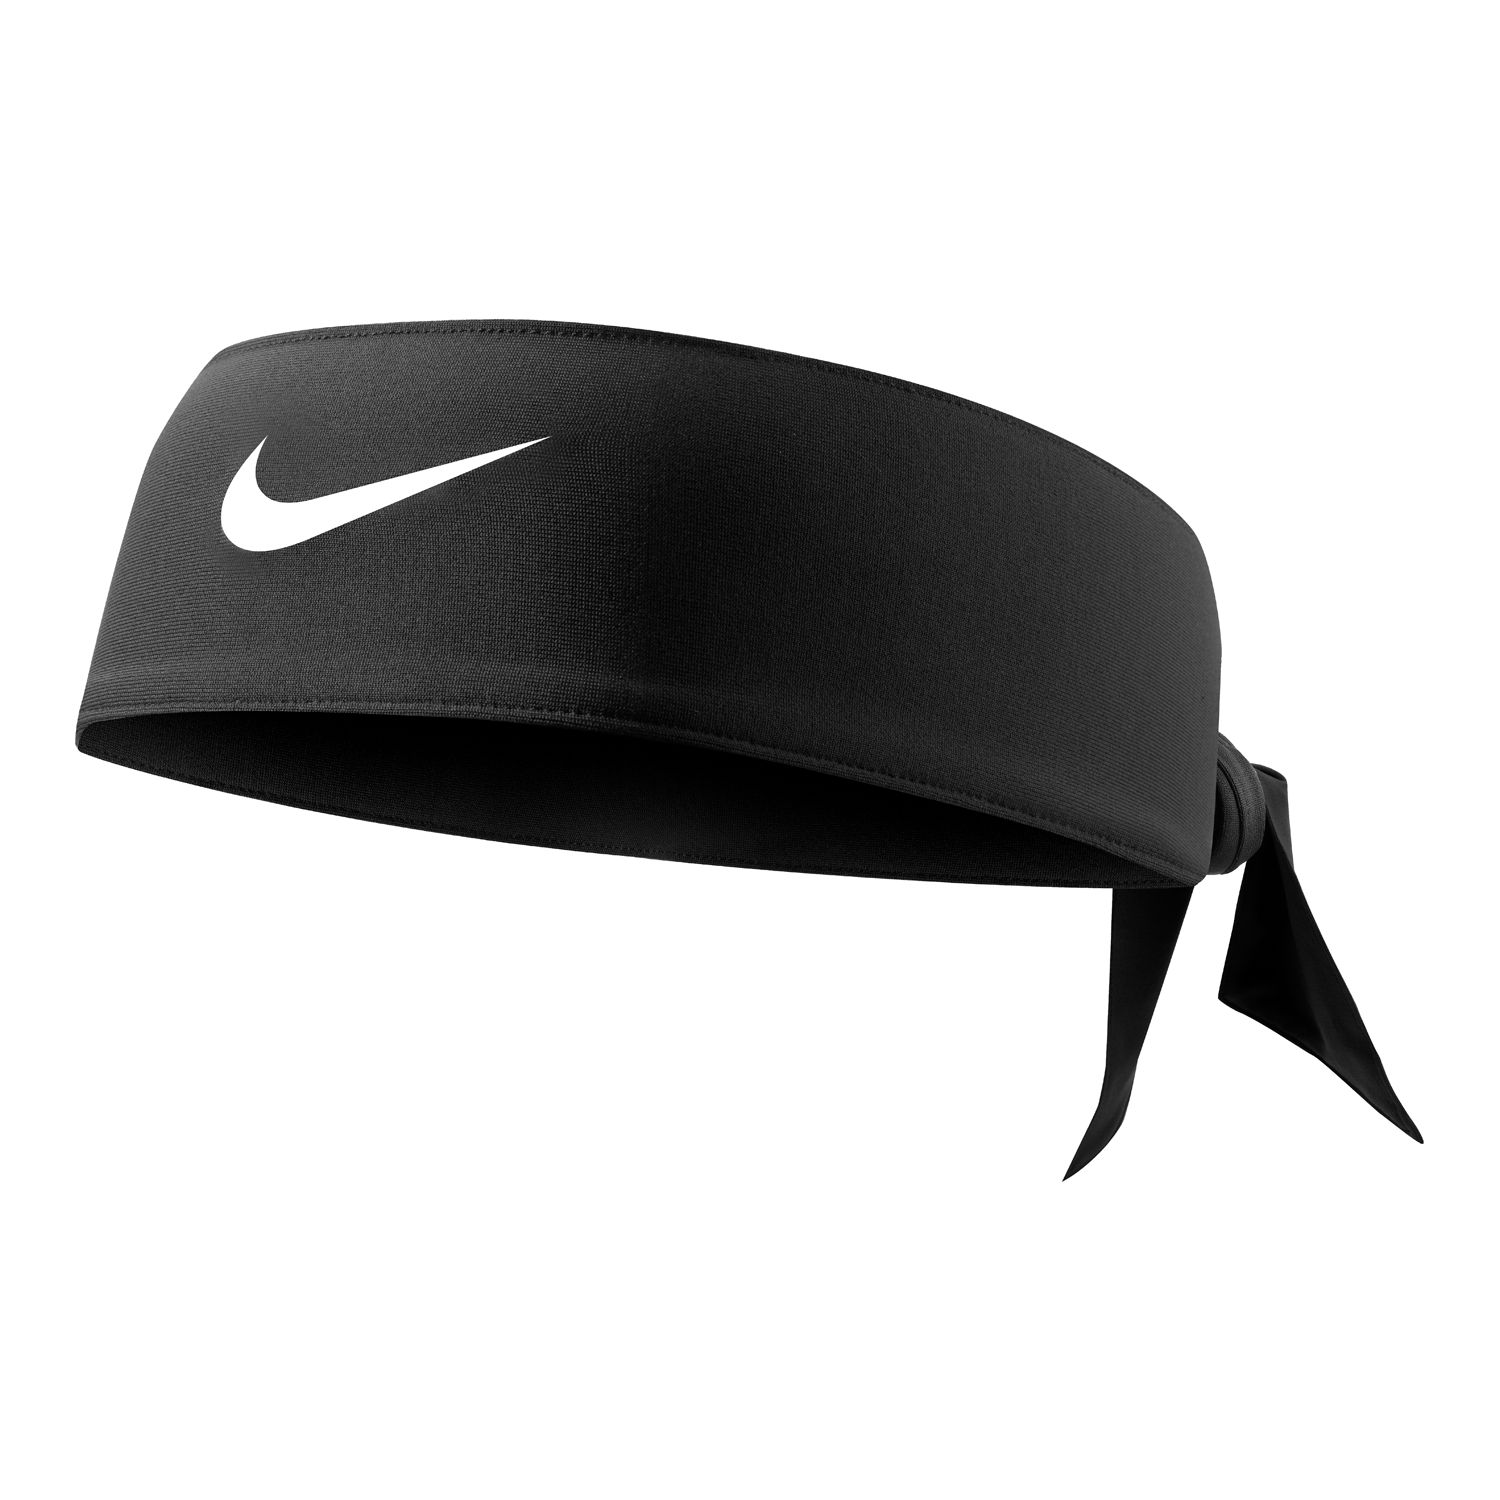 Nike Headbands | Kohl's